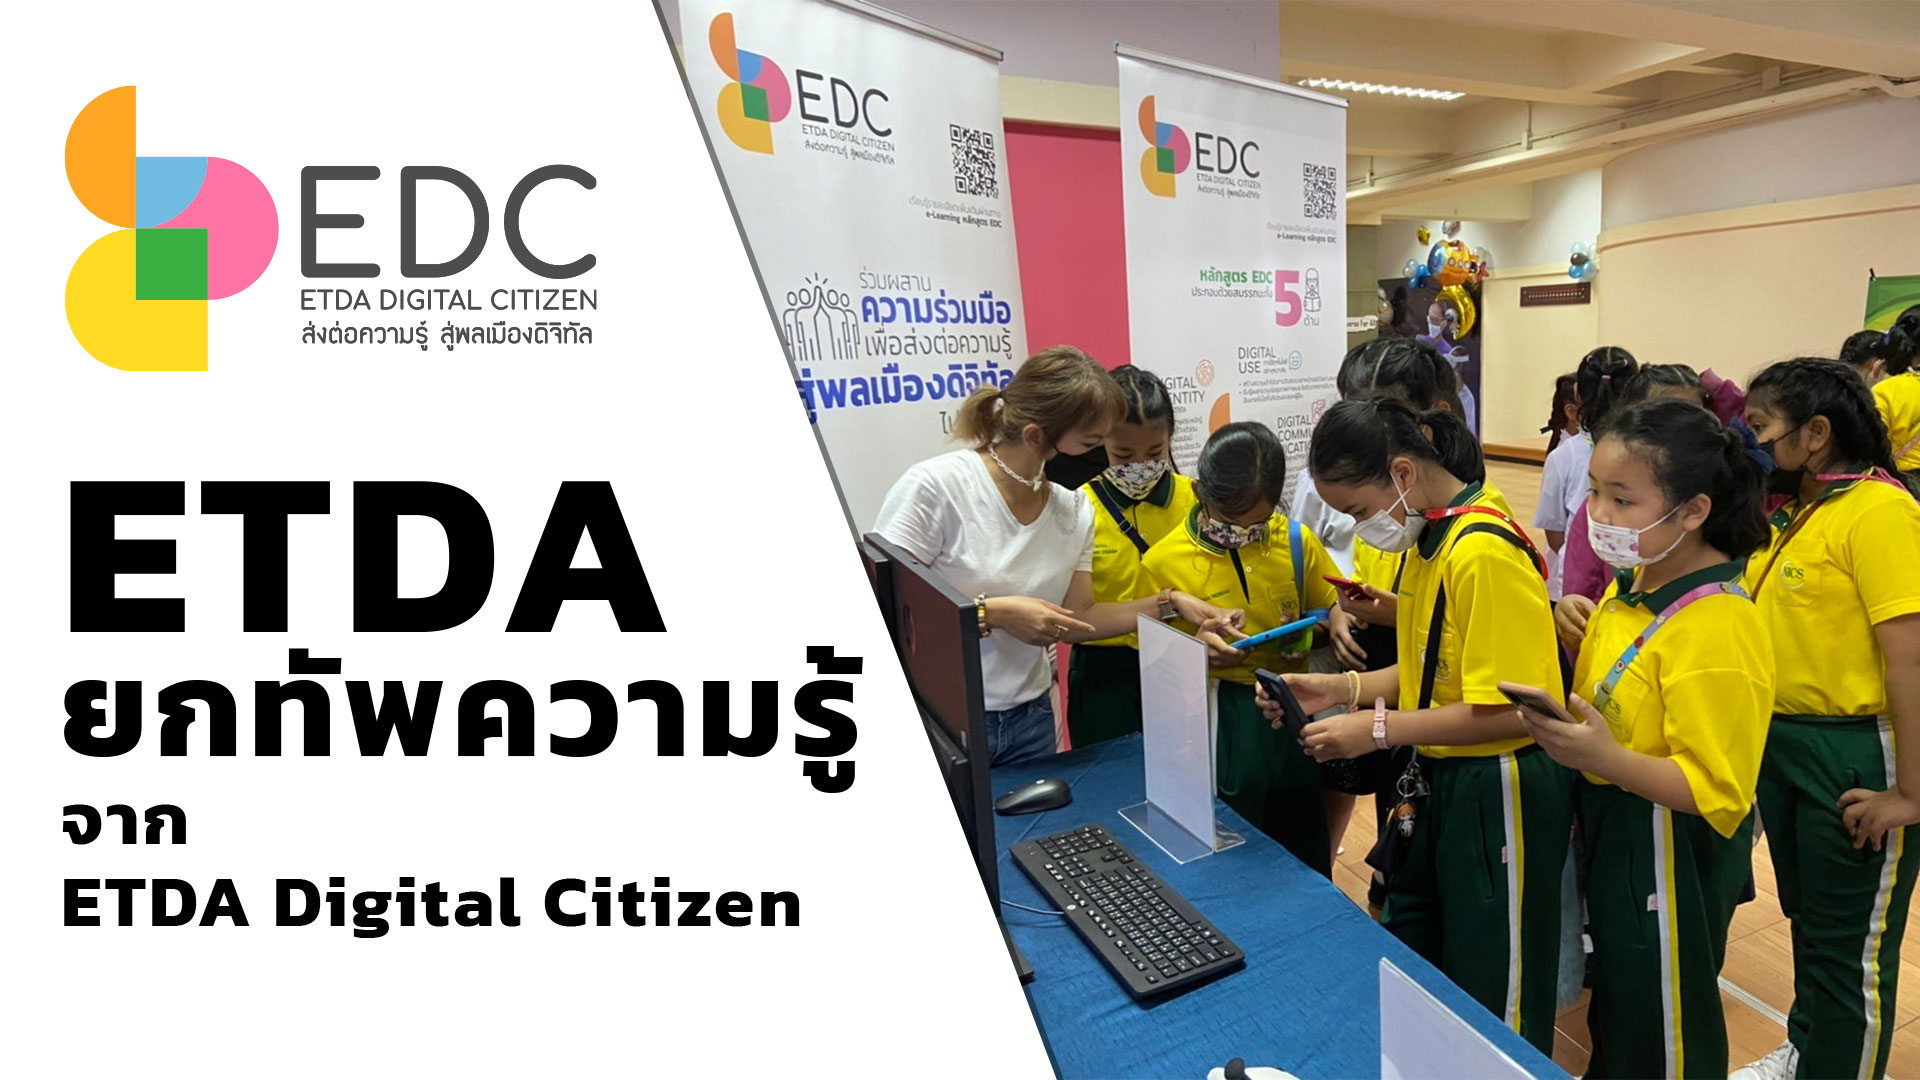 ETDA ยกทัพความรู้จาก ETDA Digital Citizen (EDC)  เสริมแกร่งการสร้างความตระหนักในการใช้อินเทอร์เน็ต และรู้เท่าทันสังคมออนไลน์ในยุคดิจิทัล แก่ชาวนครศรีธรรมราช